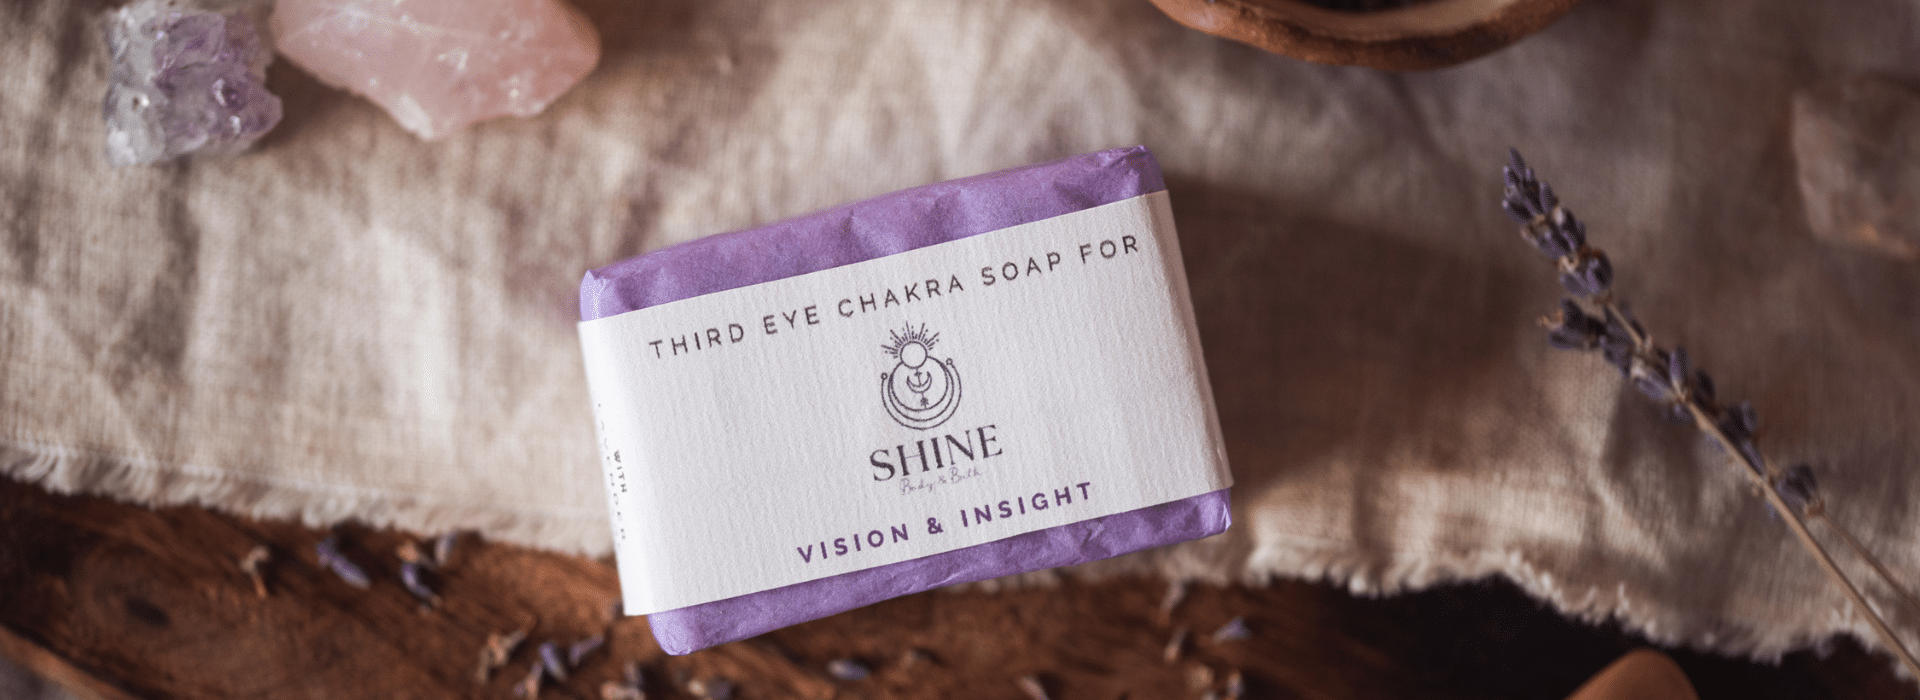 Switch to Soap - Top five reasons | Hero image - Third Eye Chakra Soap Wrapped | Shine Body & Bath Chakra Soap | Blog